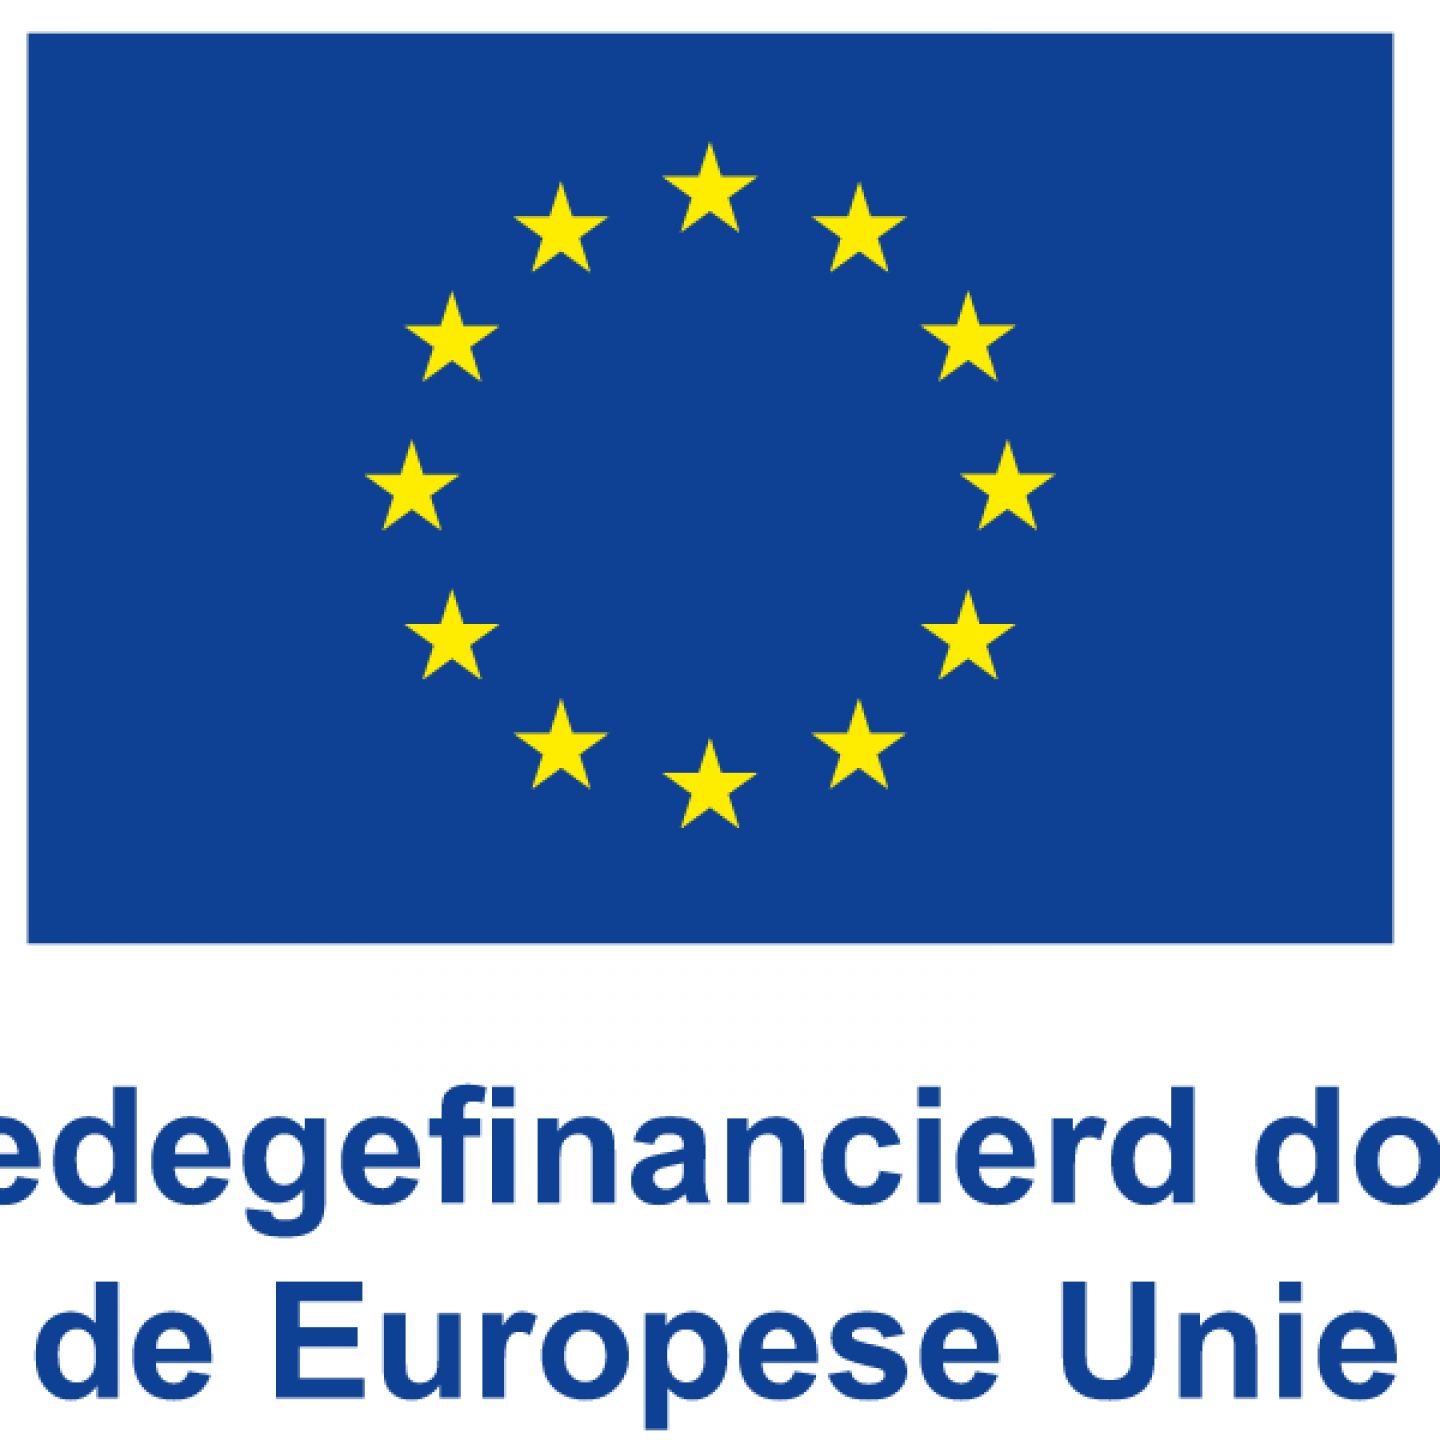 Logo Europese Unie. Tekst: Medegefinancierd door de Europese Unie